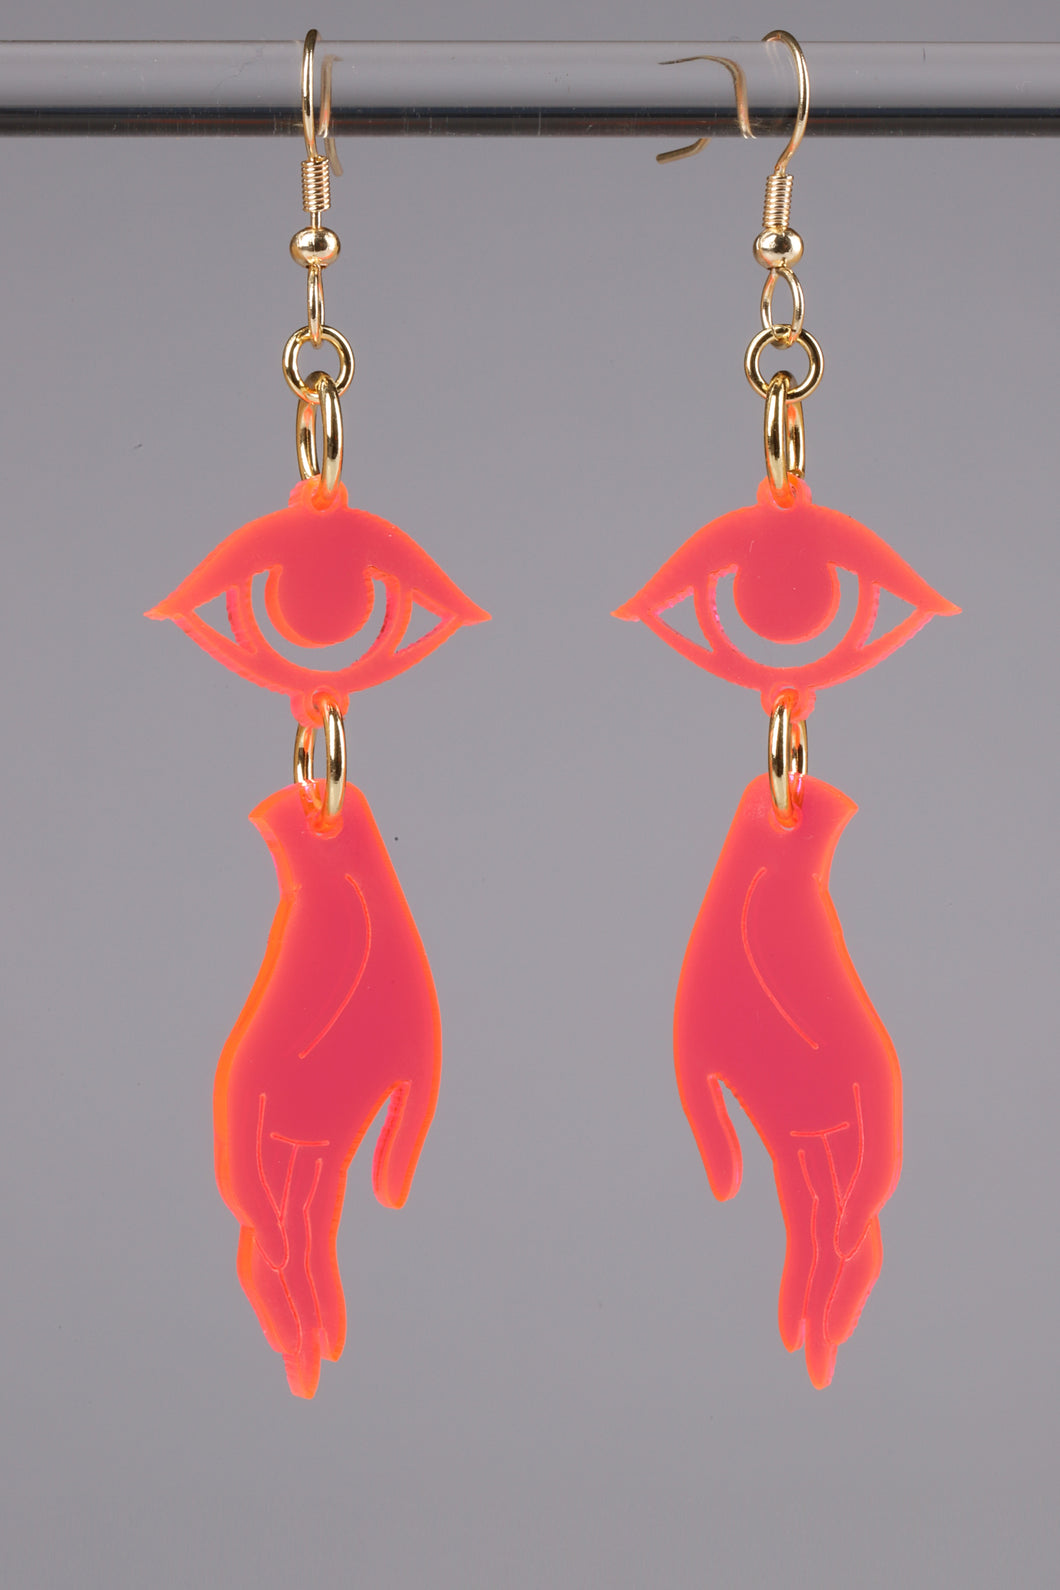 Small Hand Eye Earrings - Neon Pink